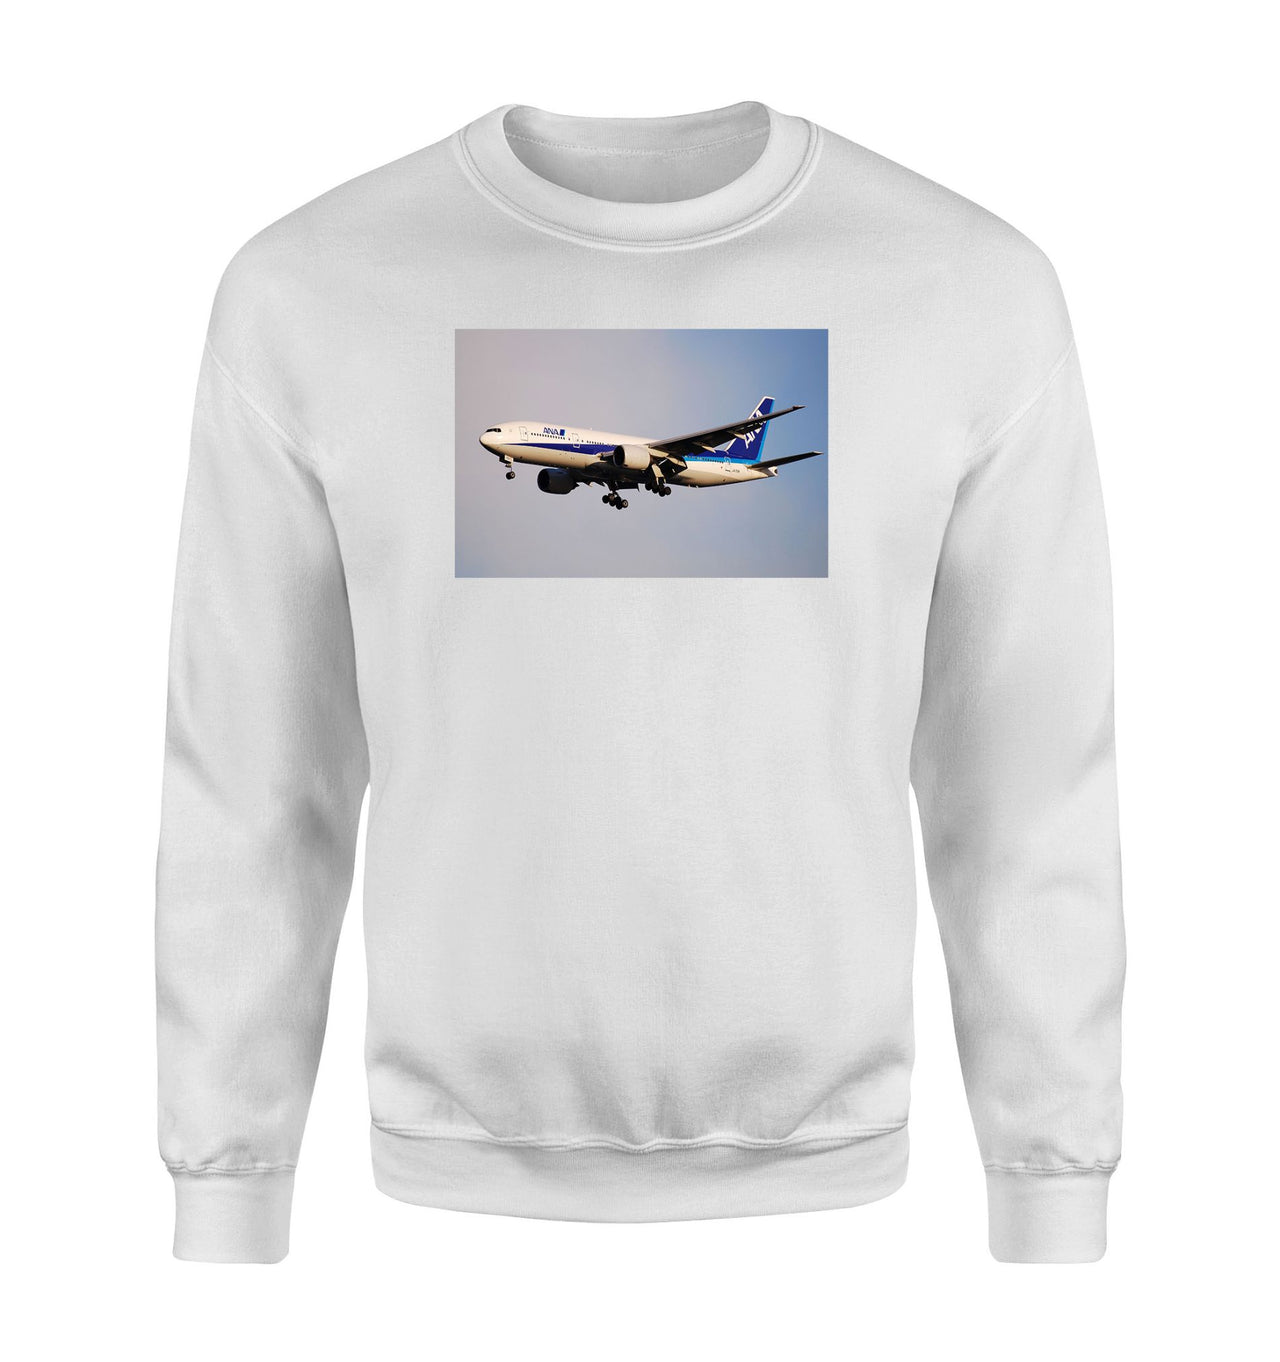 ANA's Boeing 777 Designed Sweatshirts